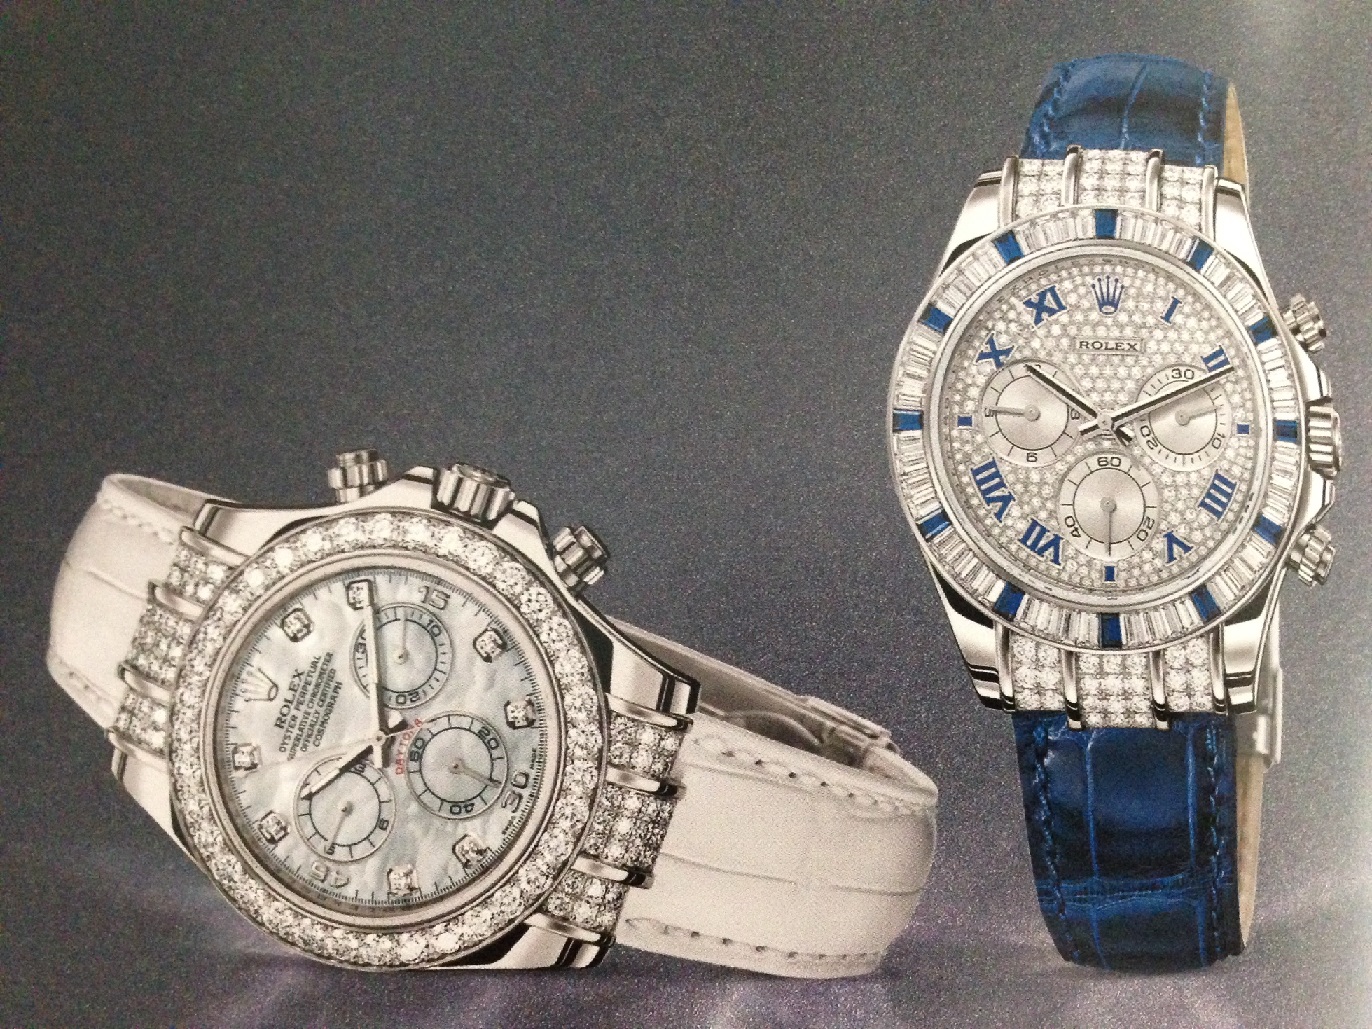 Rolex ladie's diamond watches